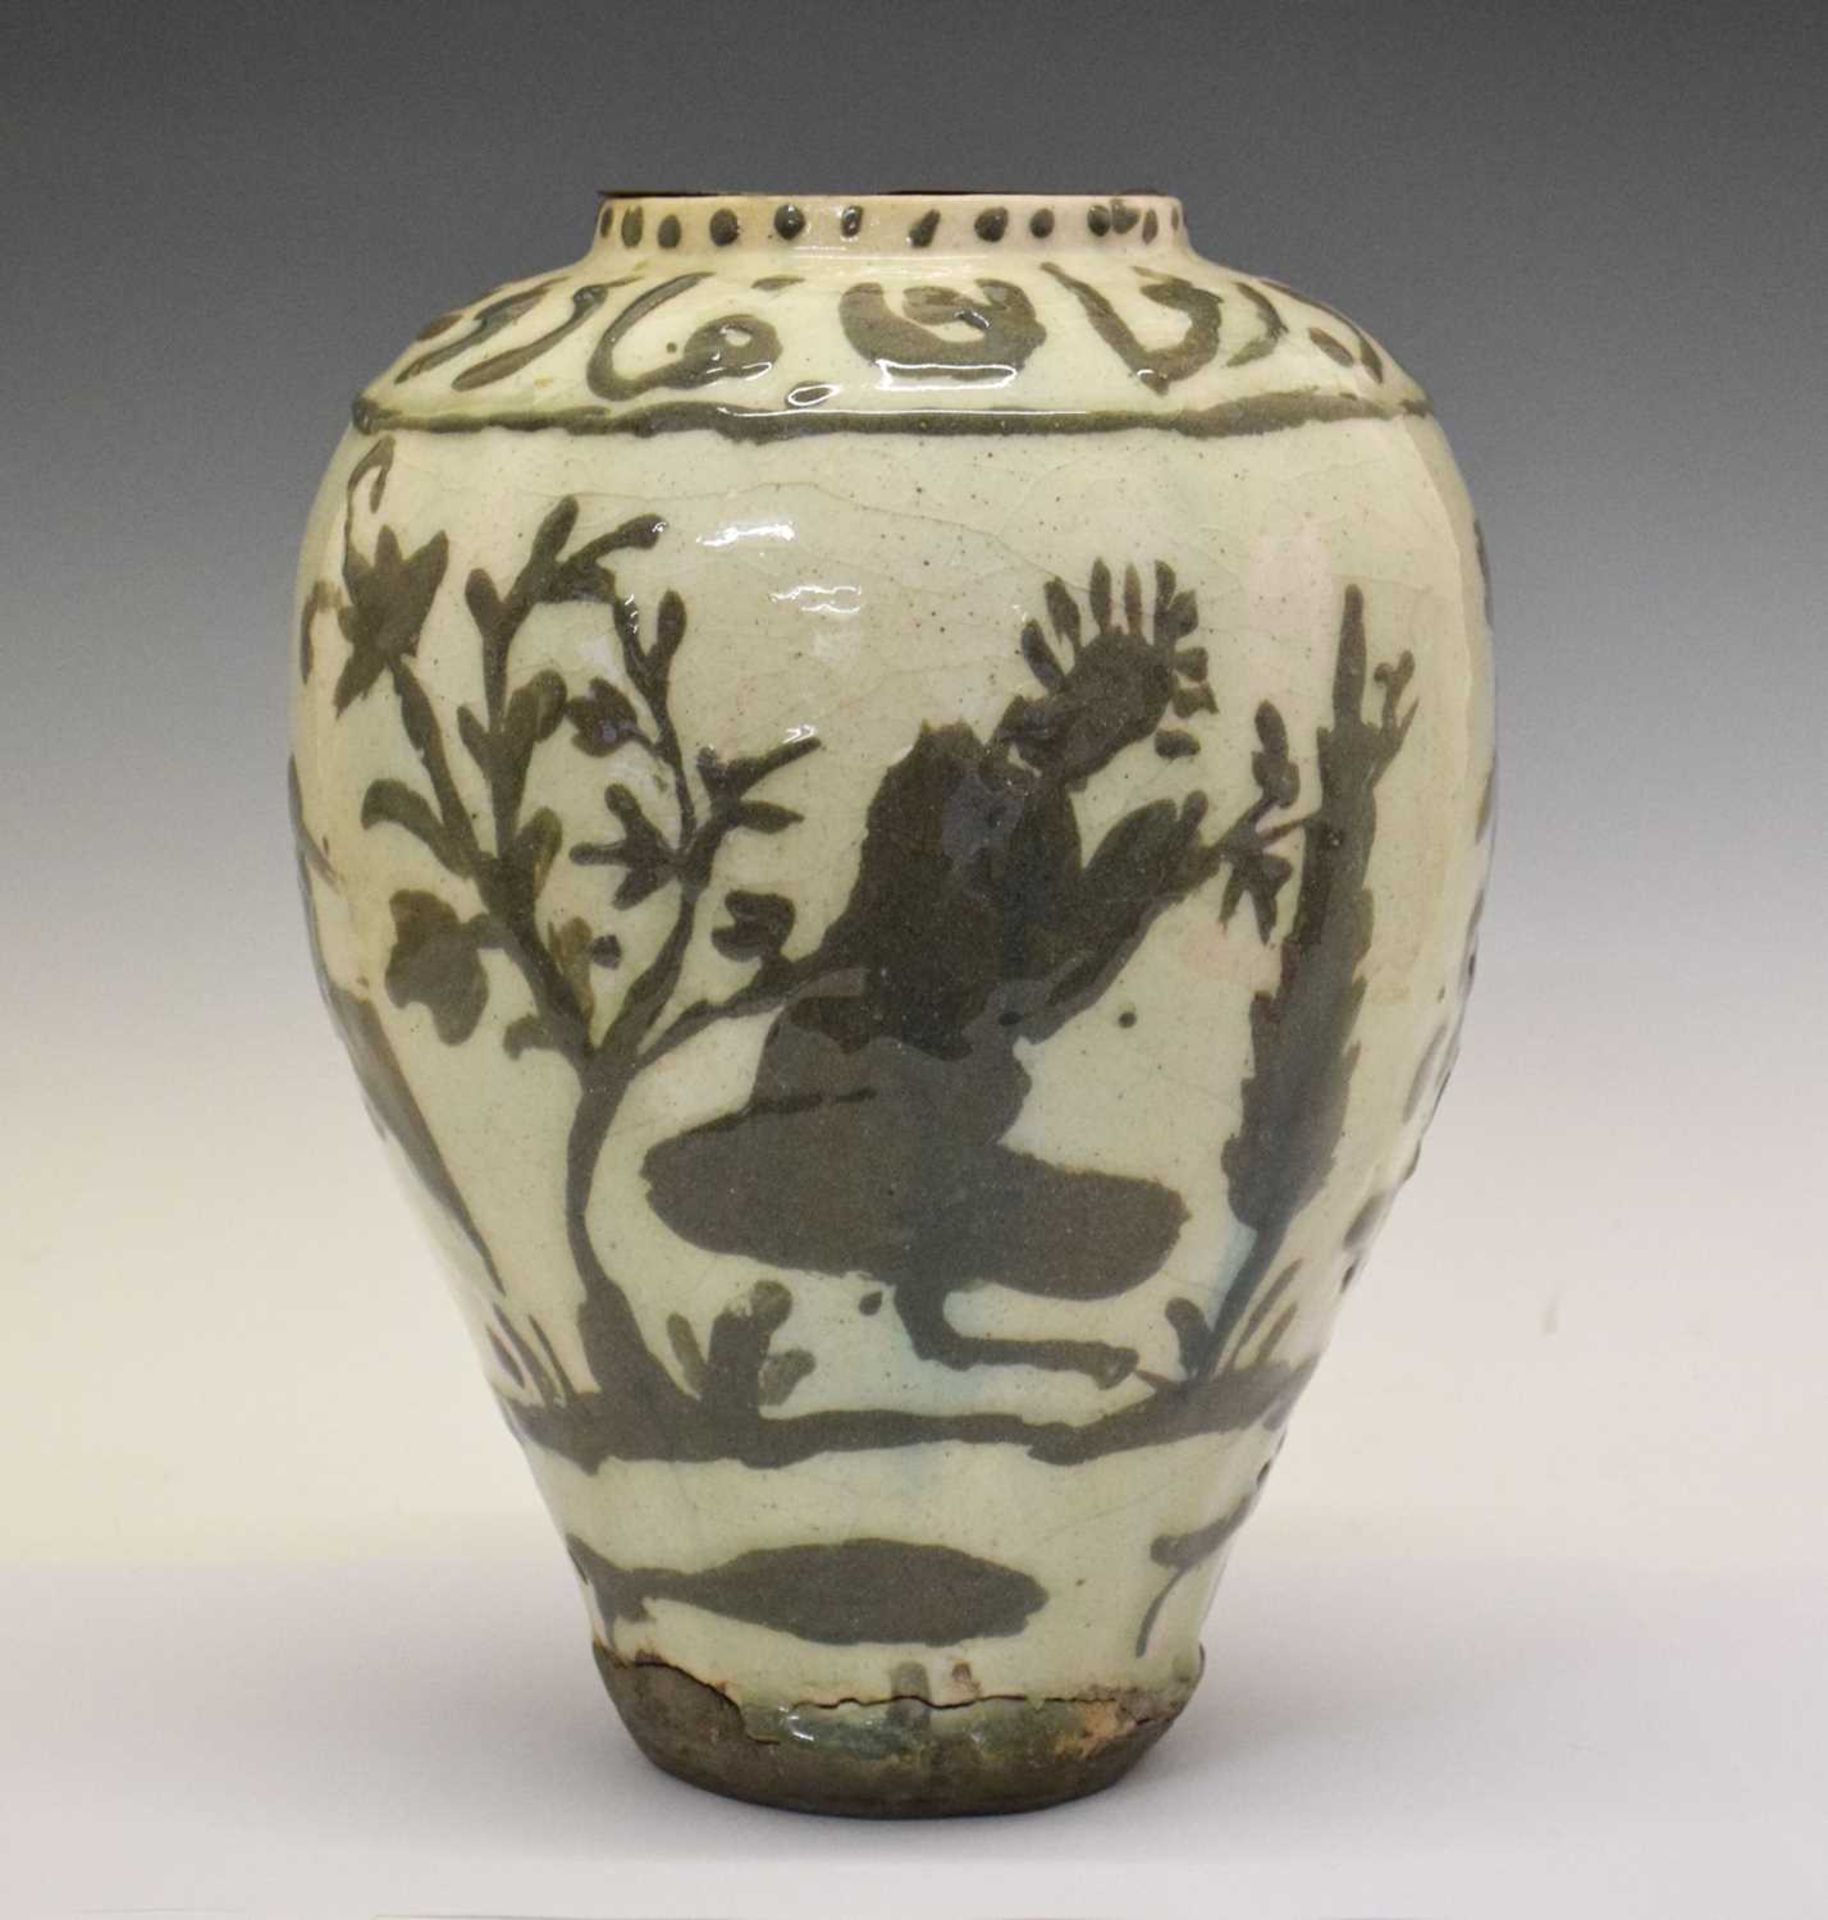 Middle Eastern slipware vase